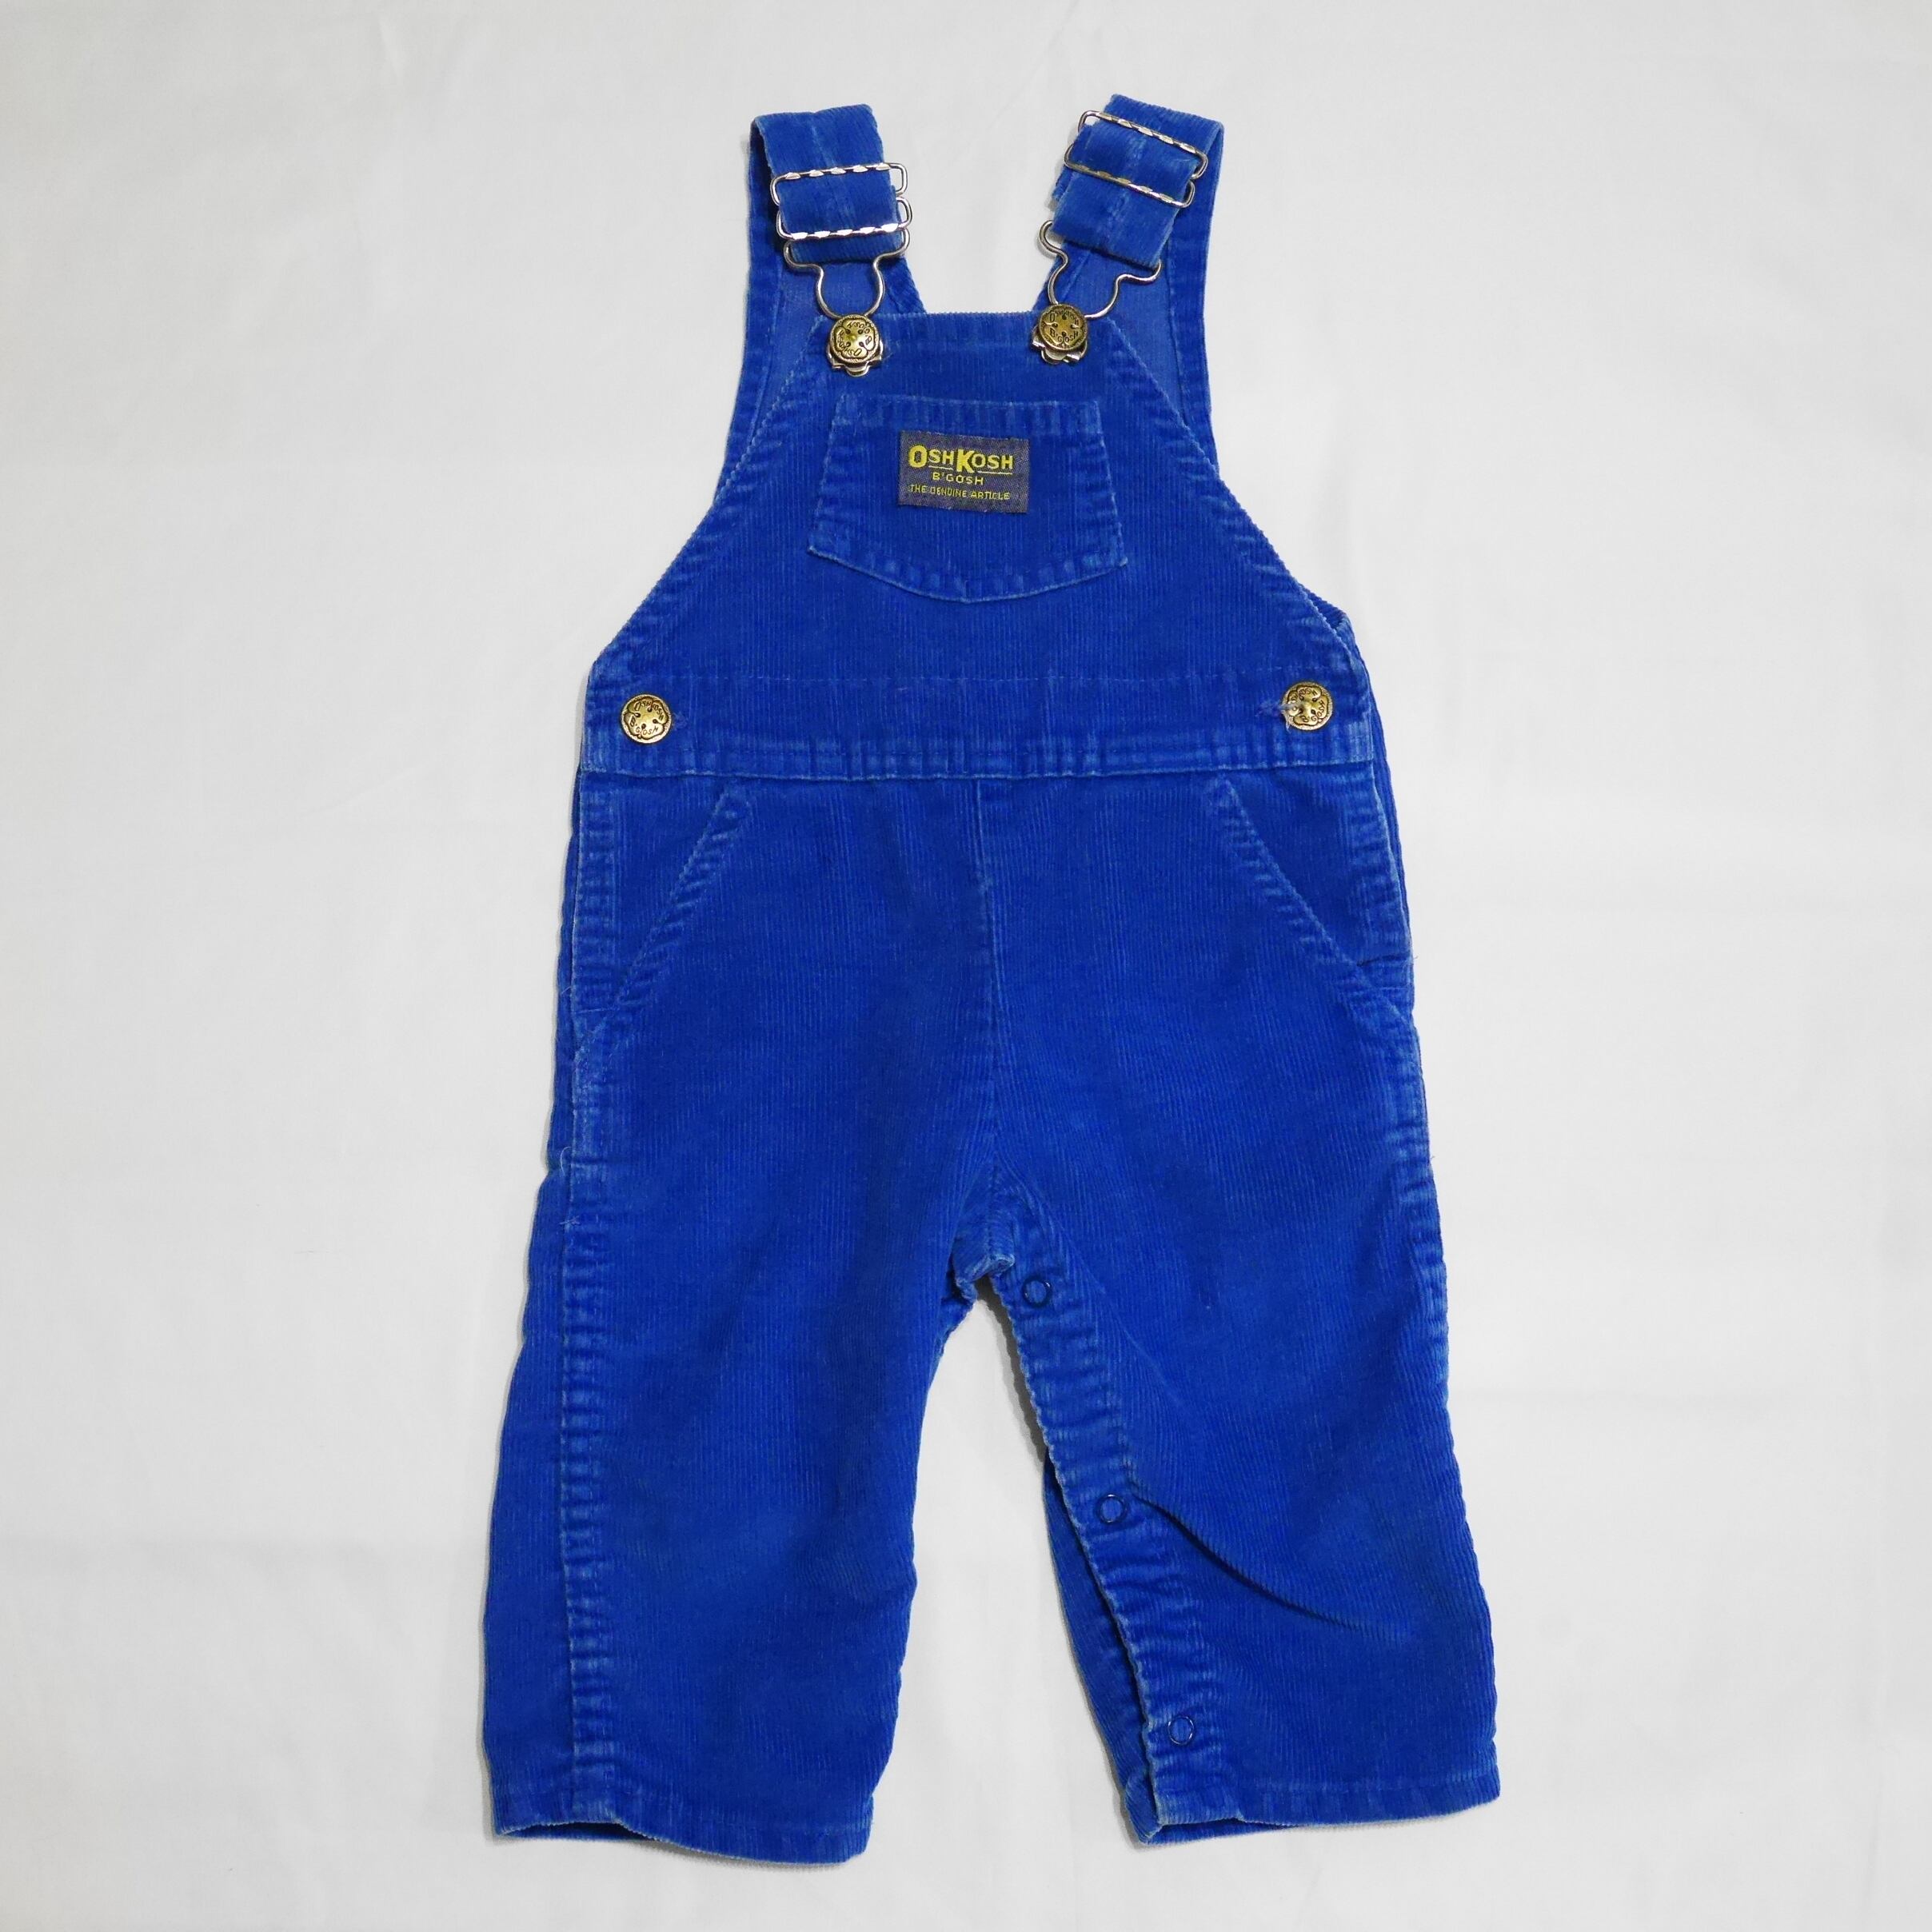 80s “Oshkosh” blue corduroy overalls | CLEAM